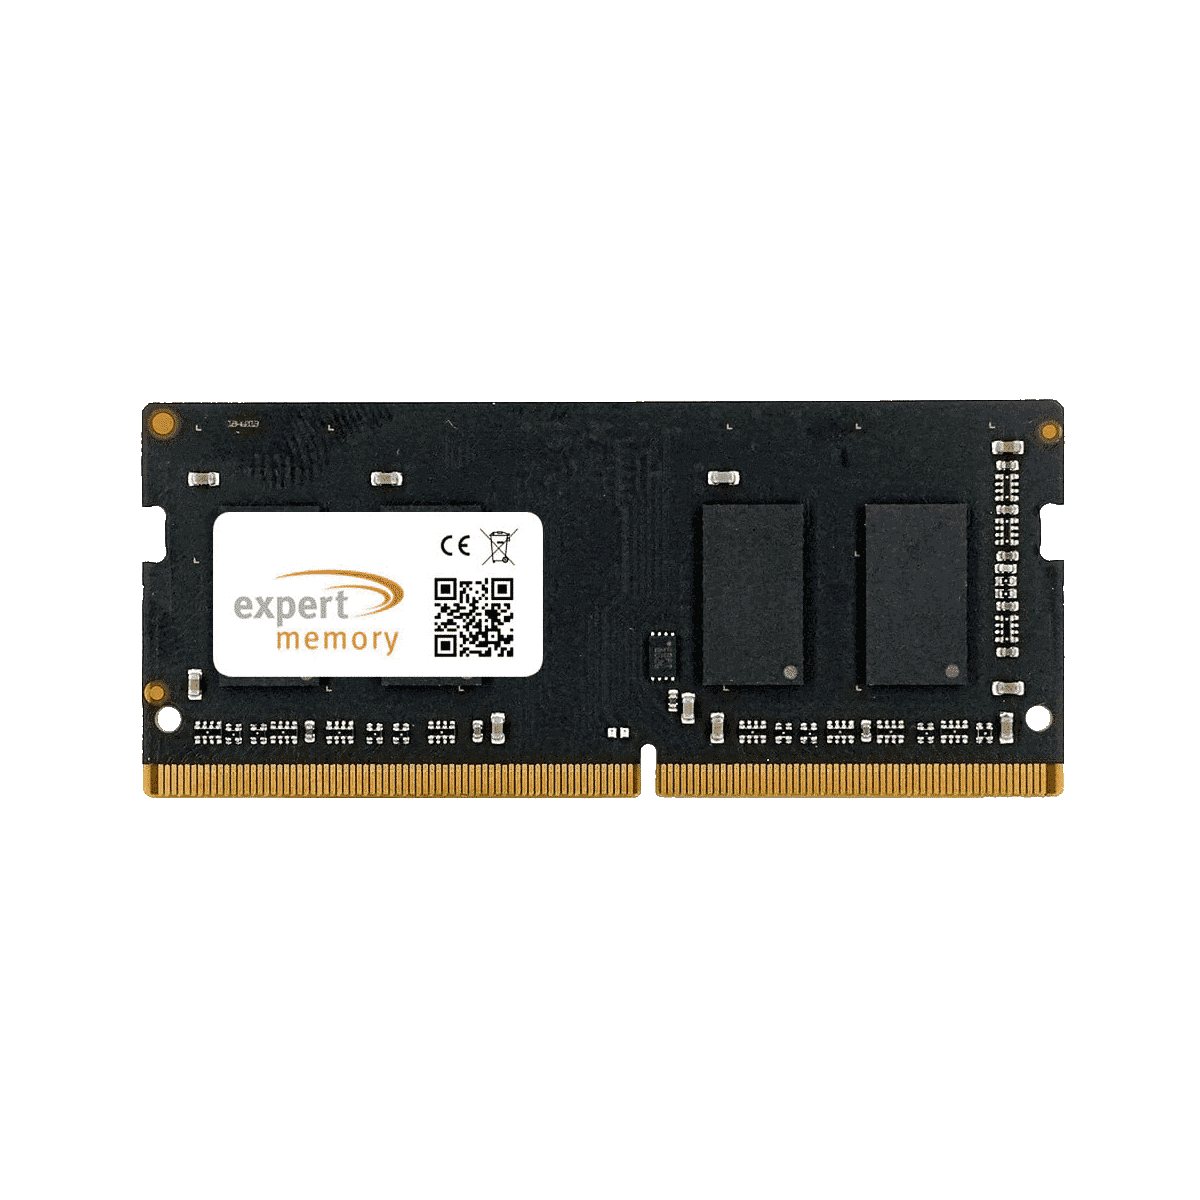 EXPERT GB 32 RAM Upgrade MEMORY HP DDR4 32GB Memory Studio Zbook Laptop G4